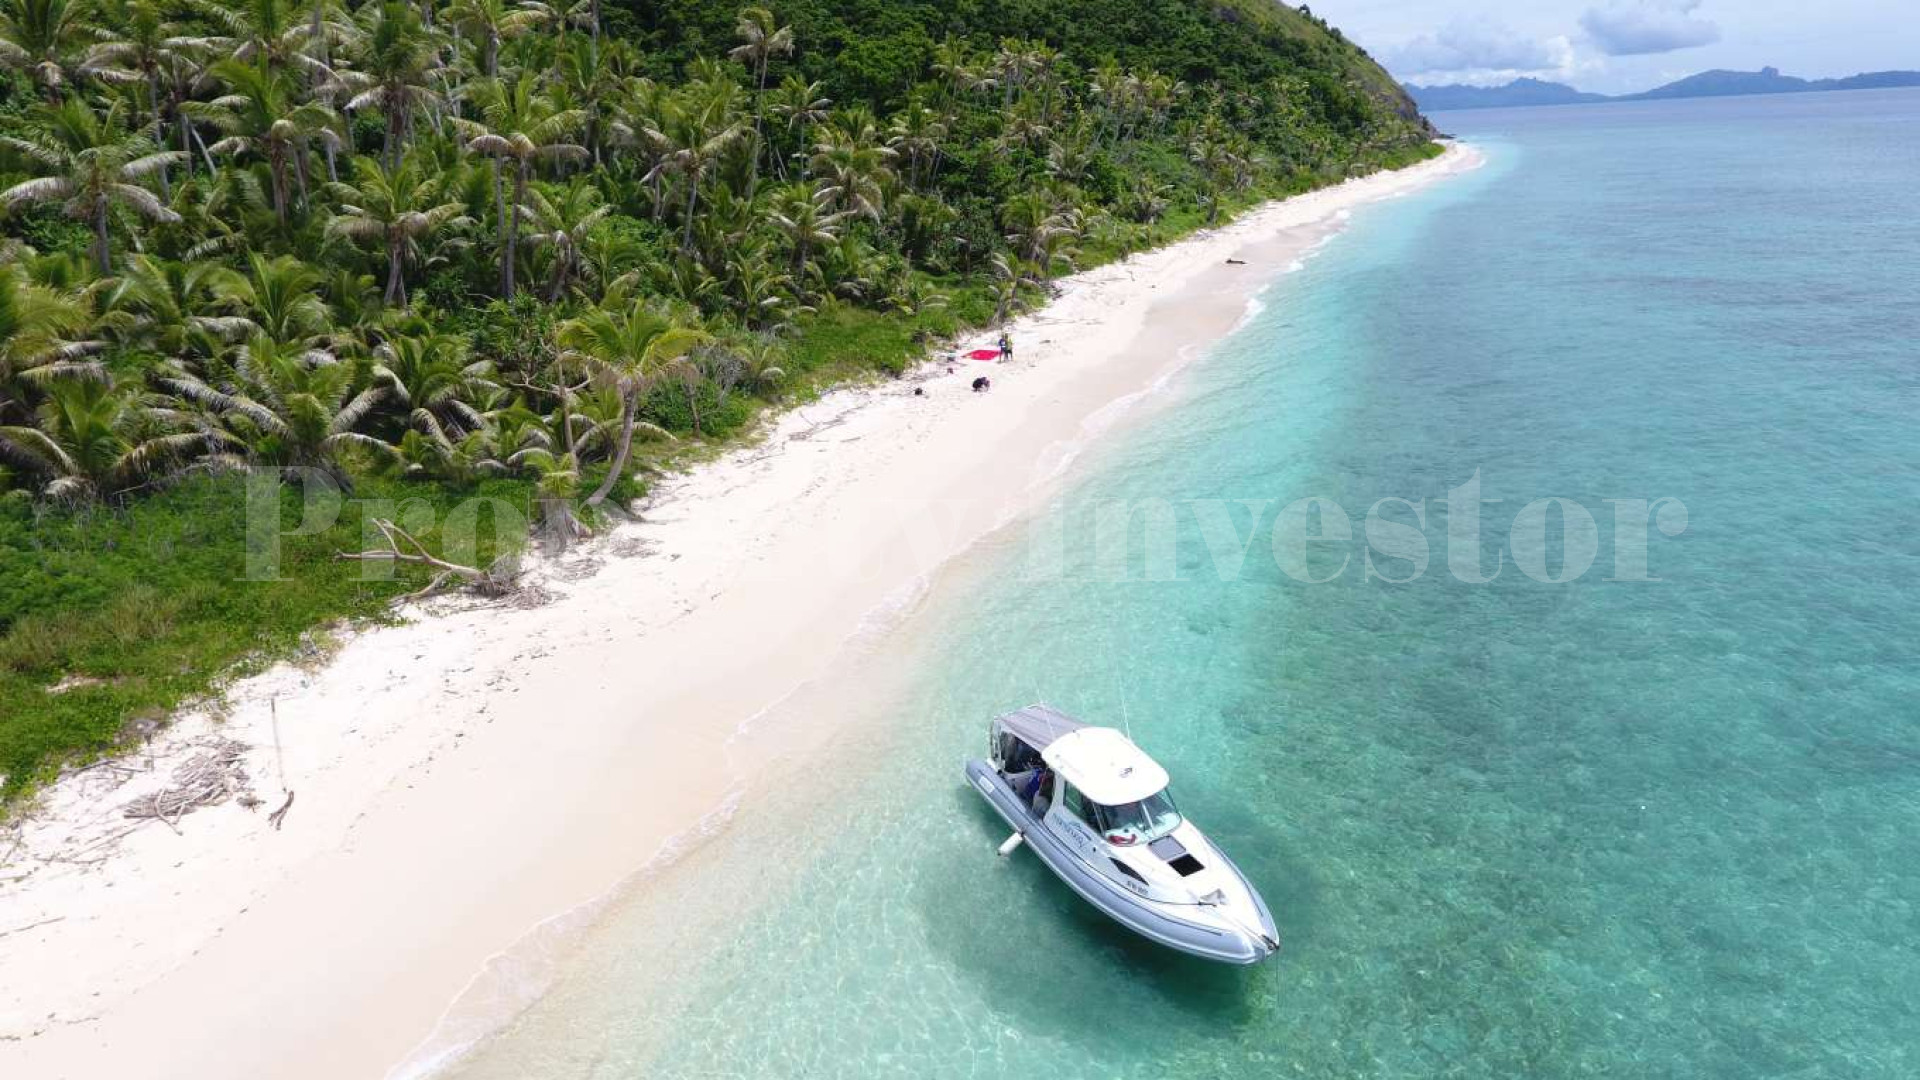 70 Acre Private Tropical Island for Sale in Fiji